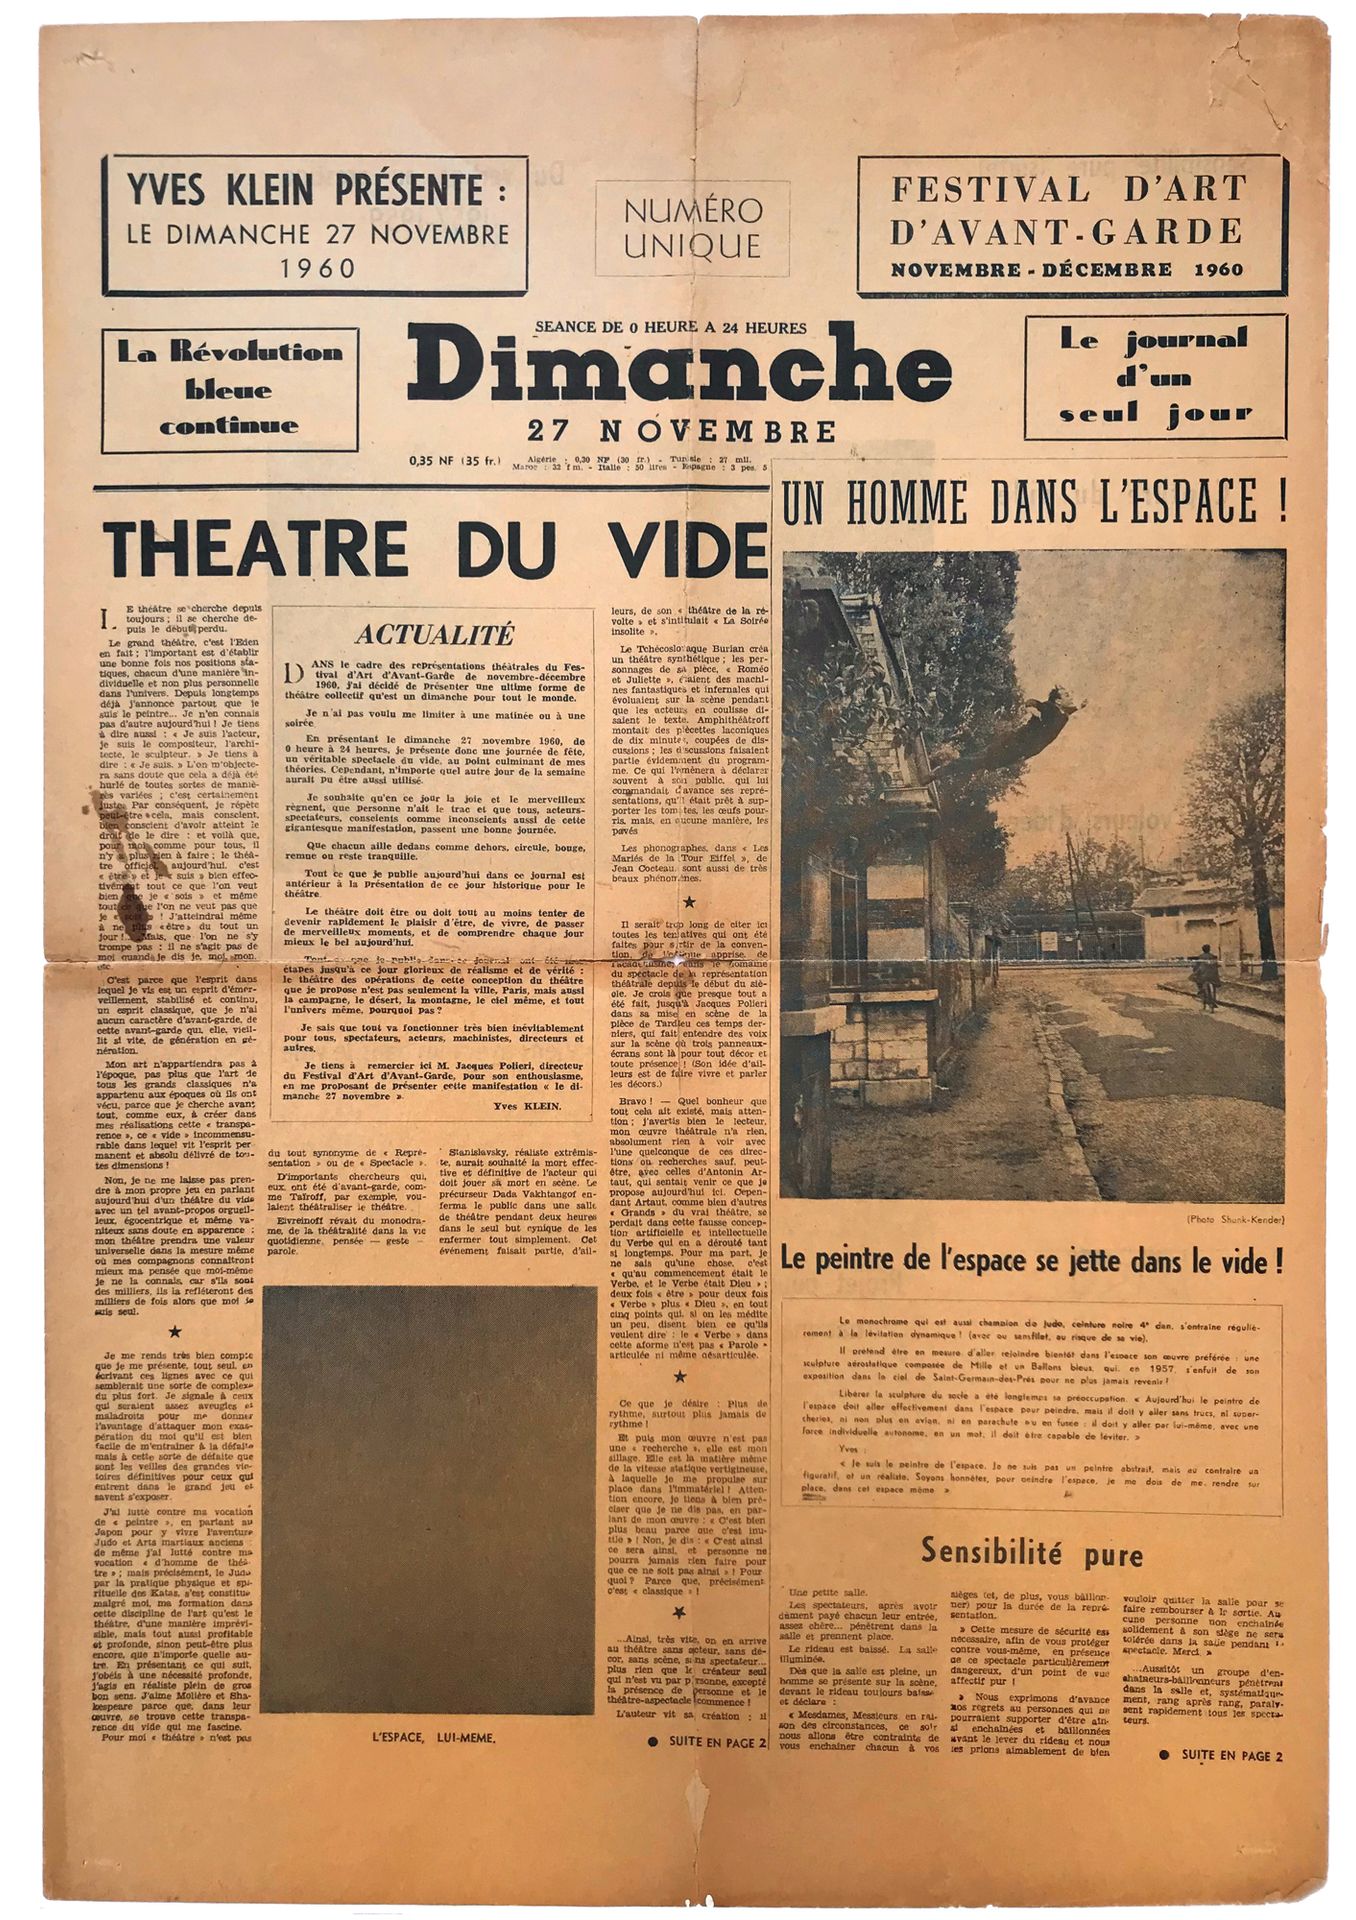 [YVES KLEIN] Le Journal d'un jour, 1960
Originalexemplar dieser berühmten gefäls&hellip;